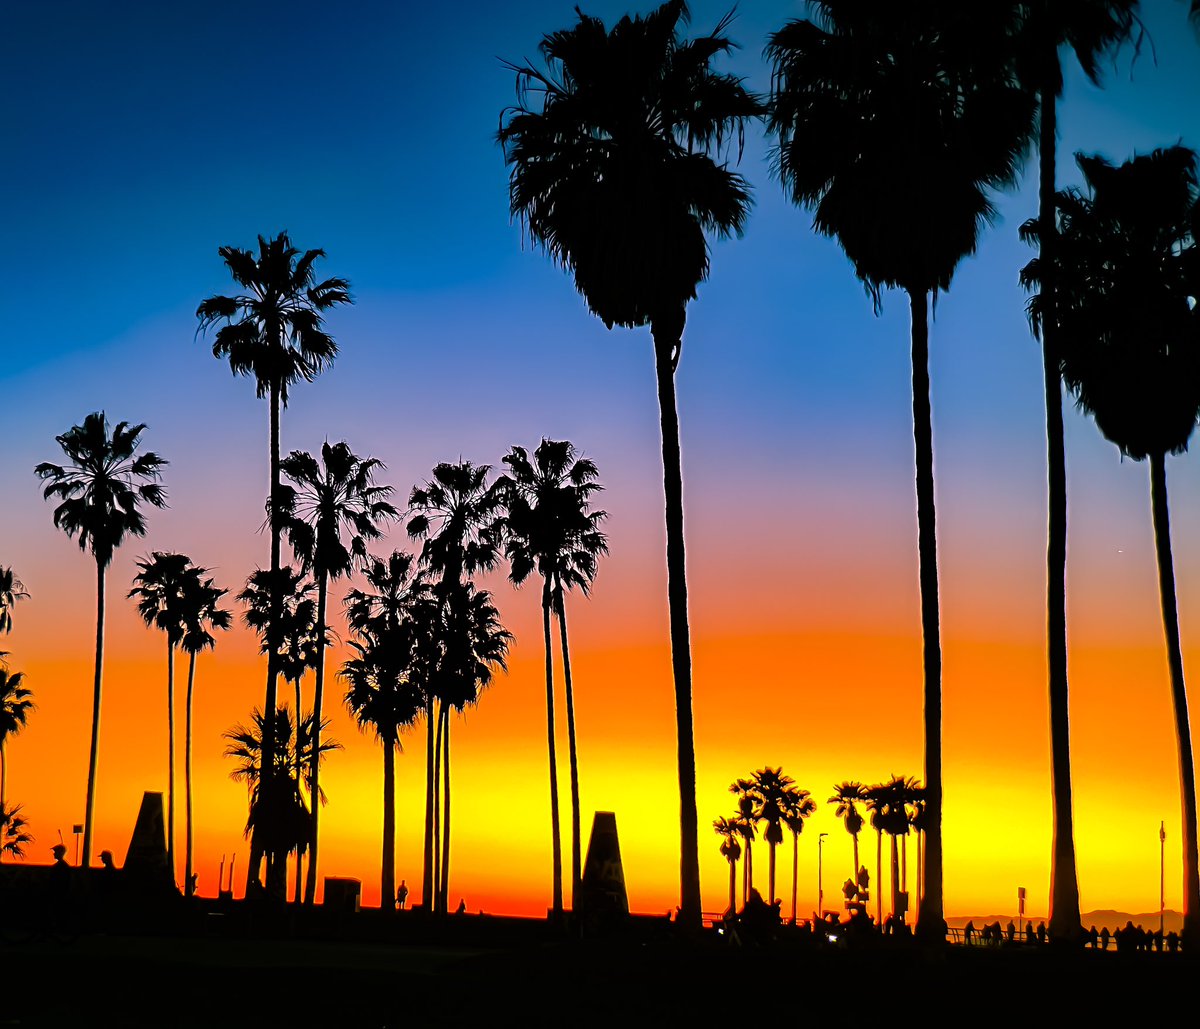 Los Angeles, CA 90291 

#Venice #LosAngeles #EclipseSolar2024 #SolarEclipse #sunsetphotography #venicebeach #bryanbphotography